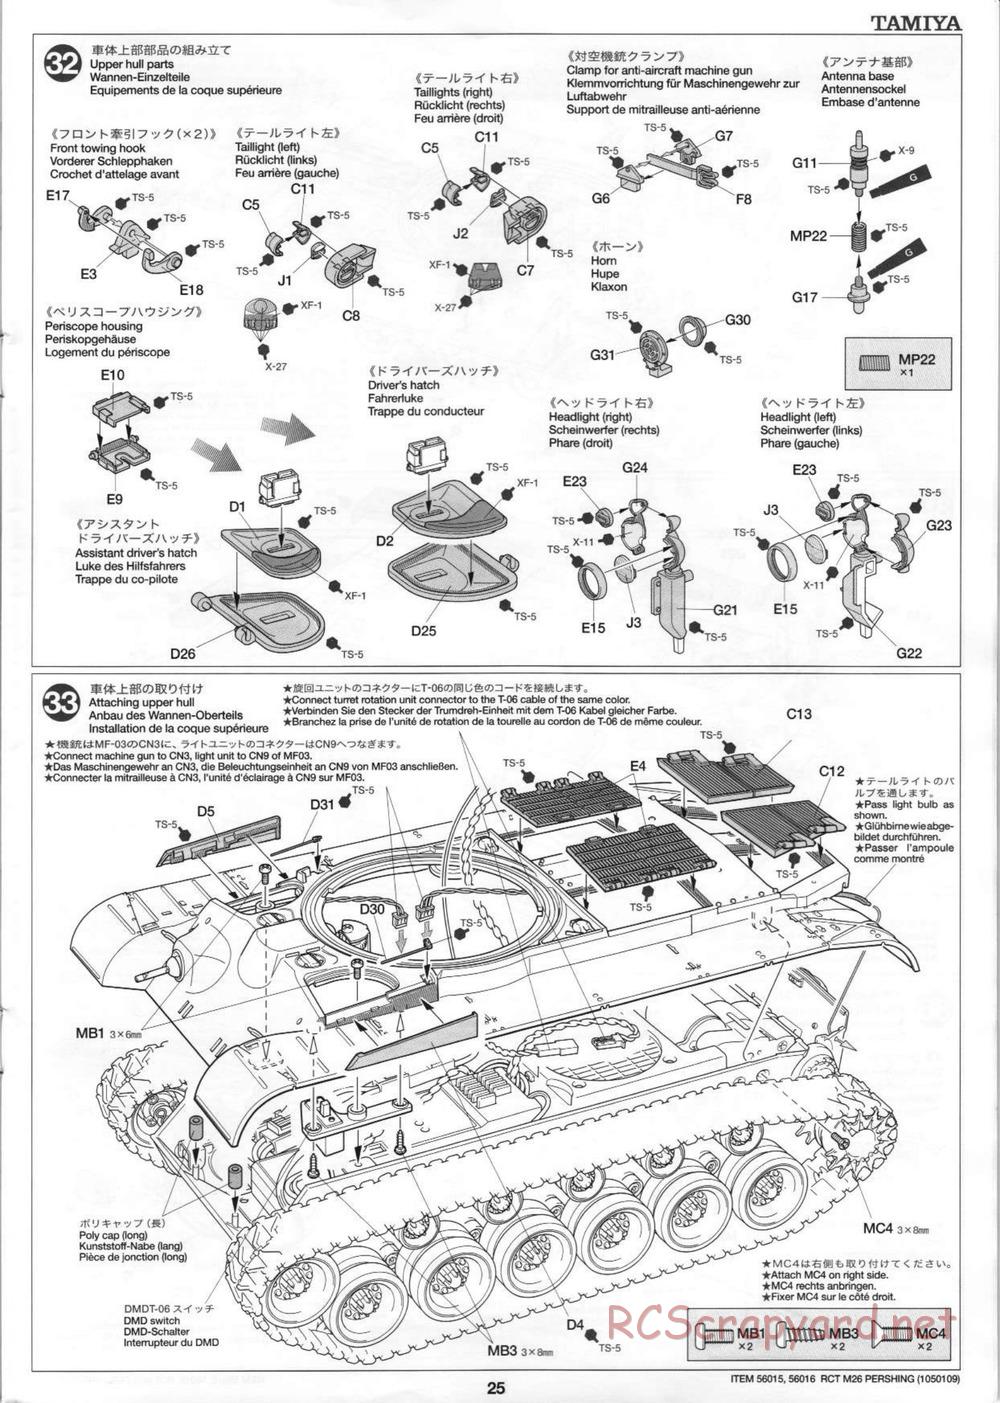 Tamiya - M26 Pershing - 1/16 Scale Chassis - Manual - Page 25